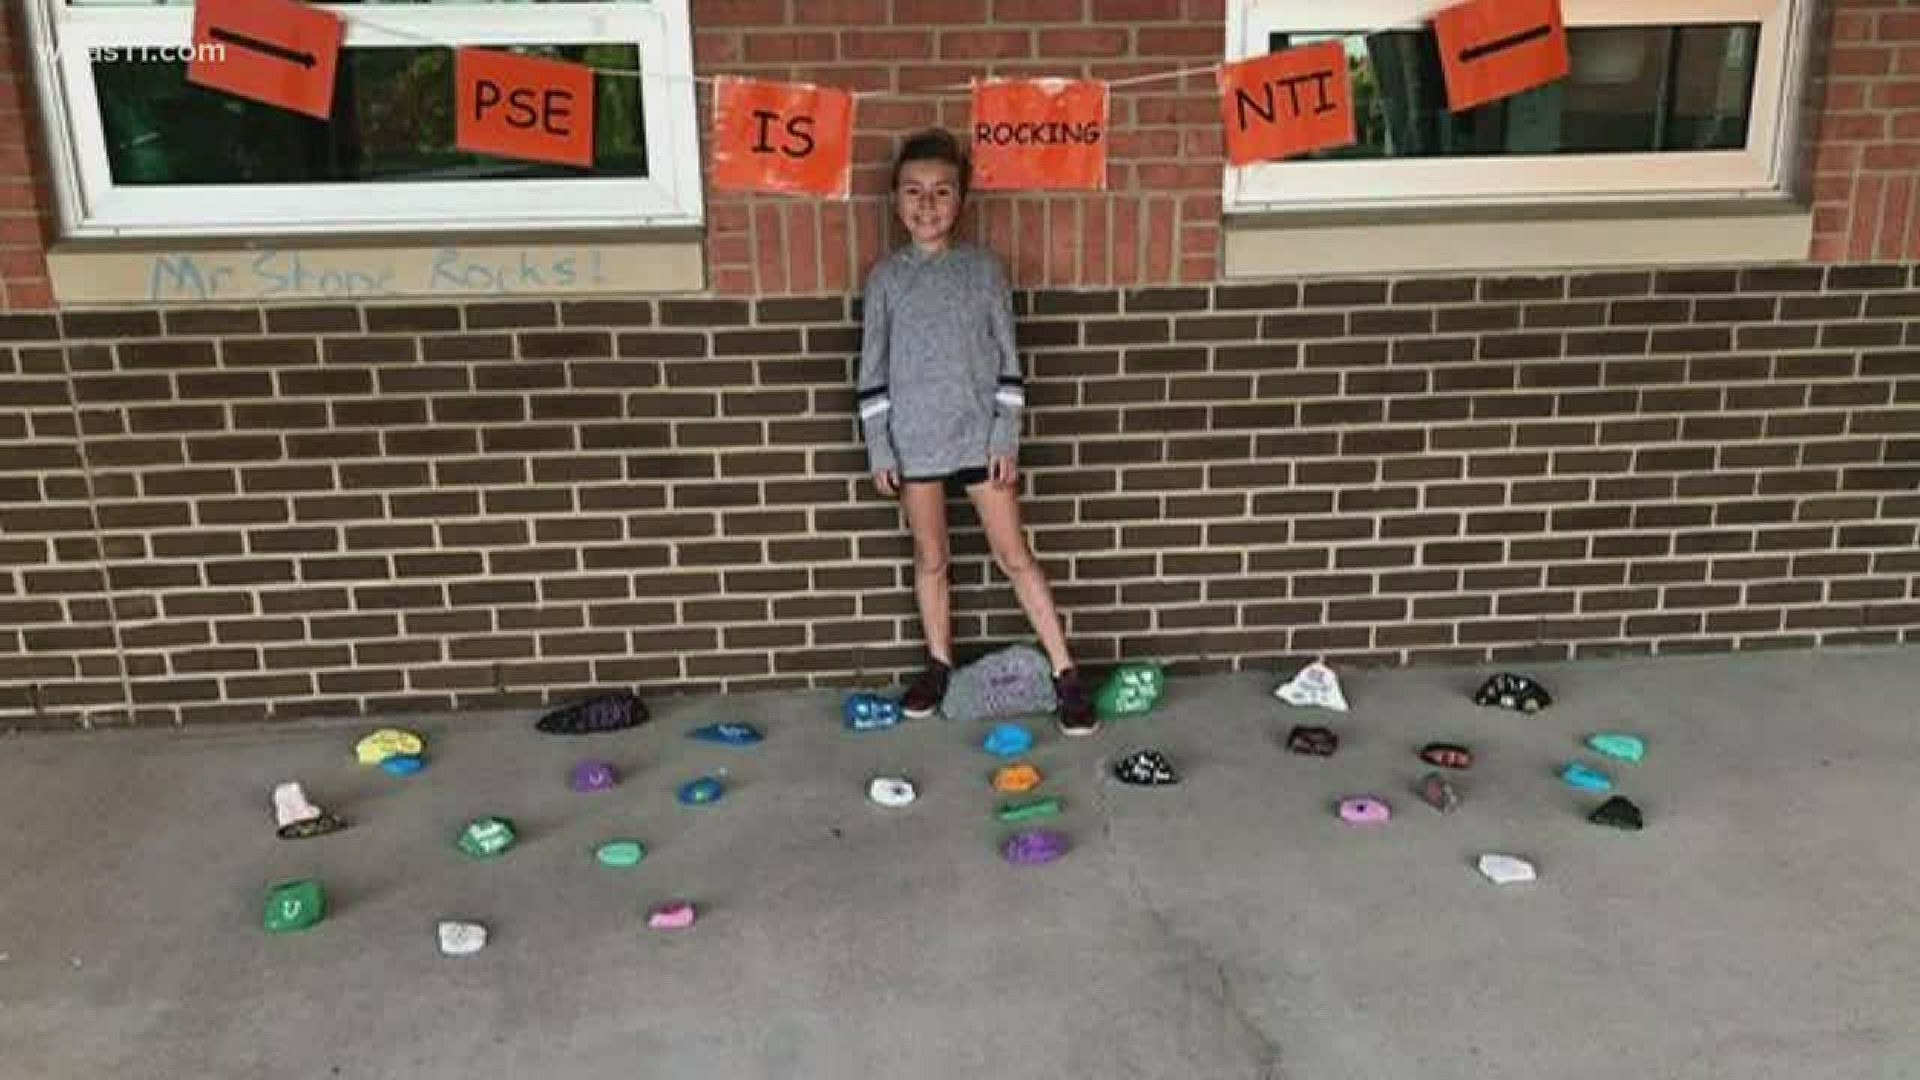 Kentucky family thanks teachers through painted rock display | 0